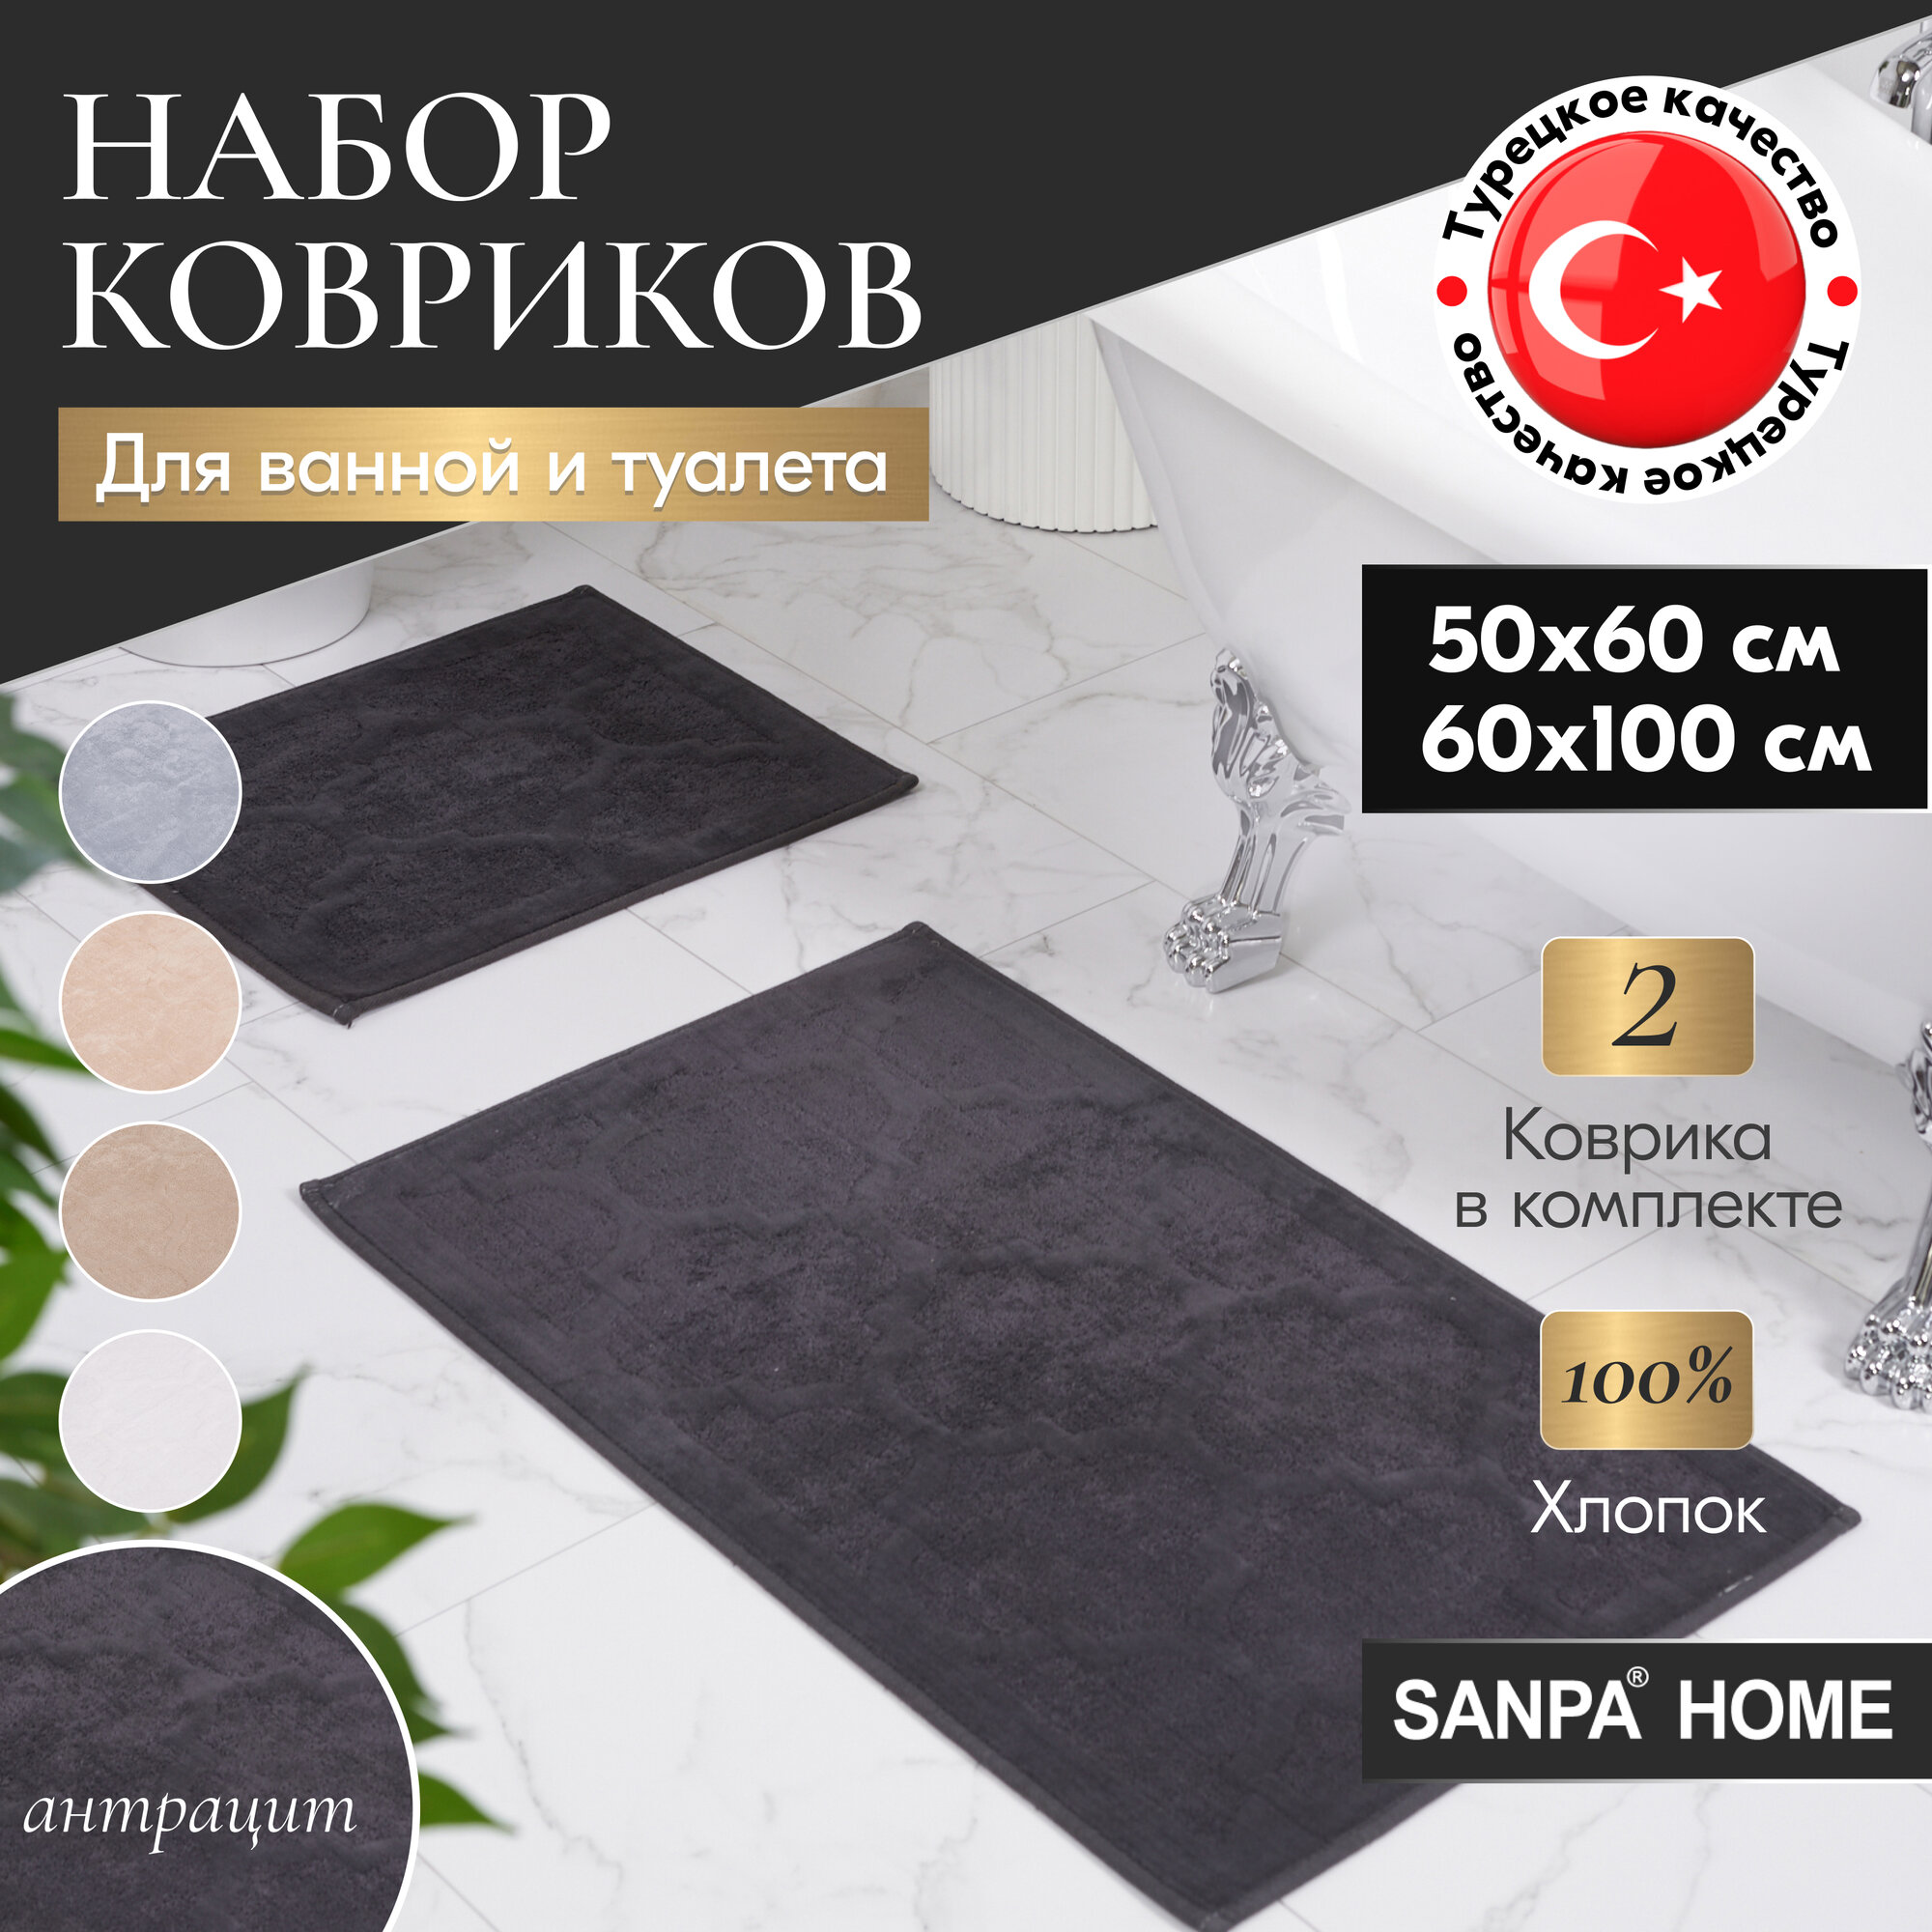 Набор ковриков для ванной и туалета SANPA HOME, антрацит, 50х60, 60х100, хлопок, 2шт.